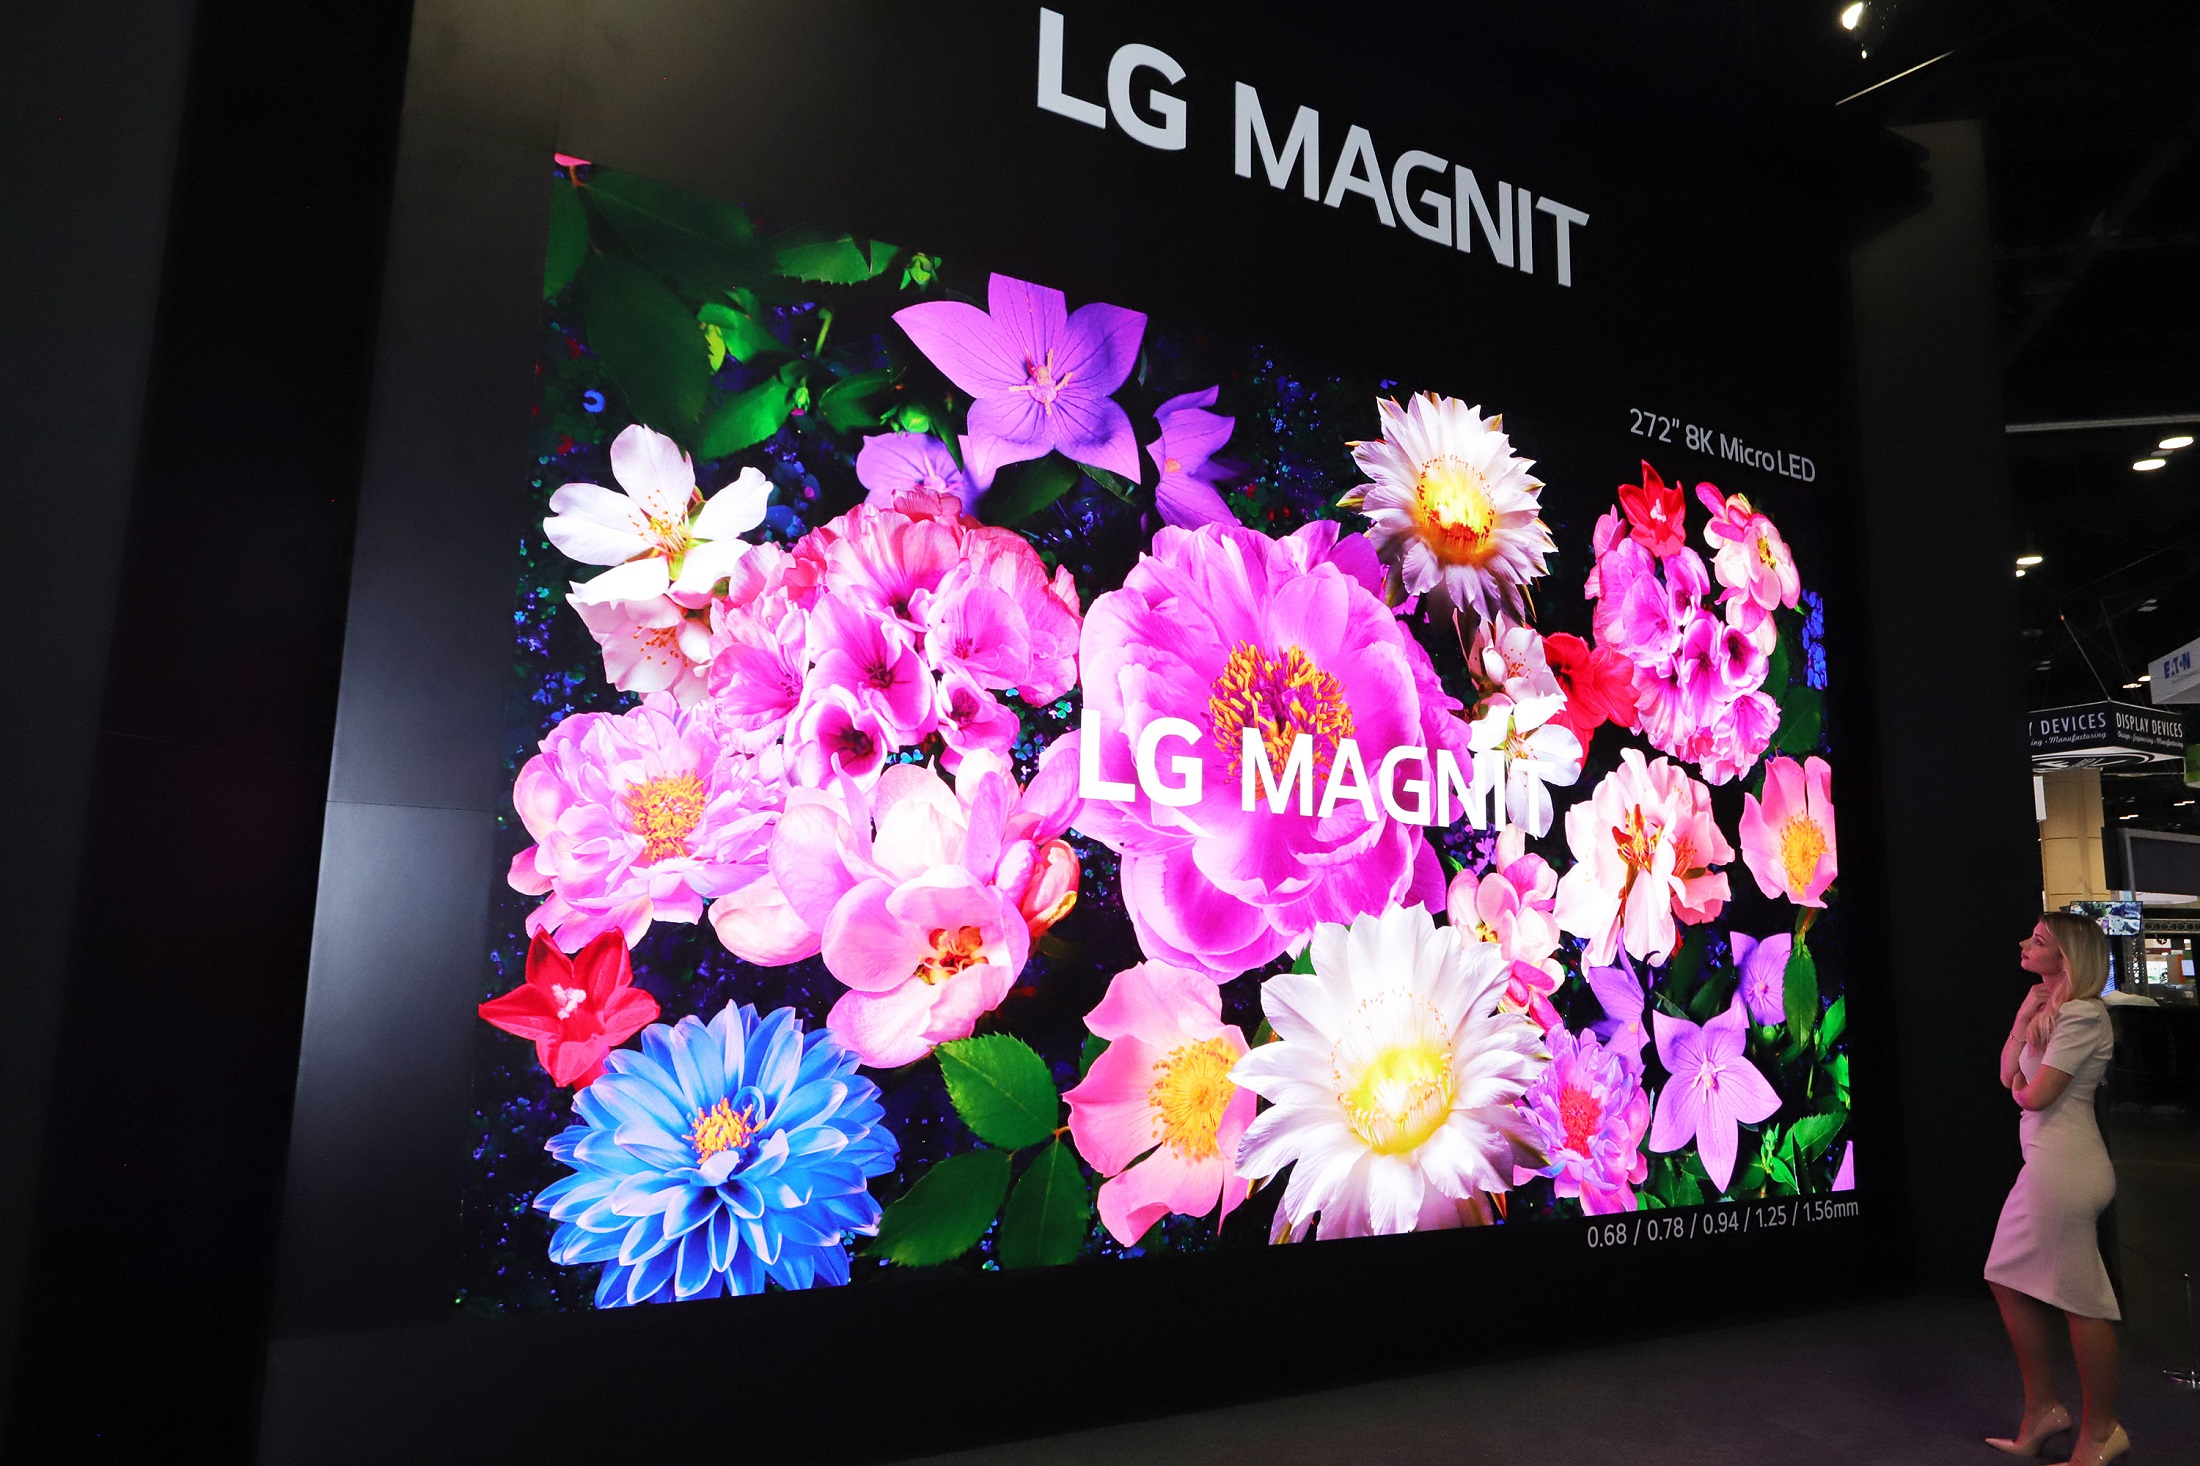 LG MAGNIT 8K Micro LED display in the Digital Art Zone